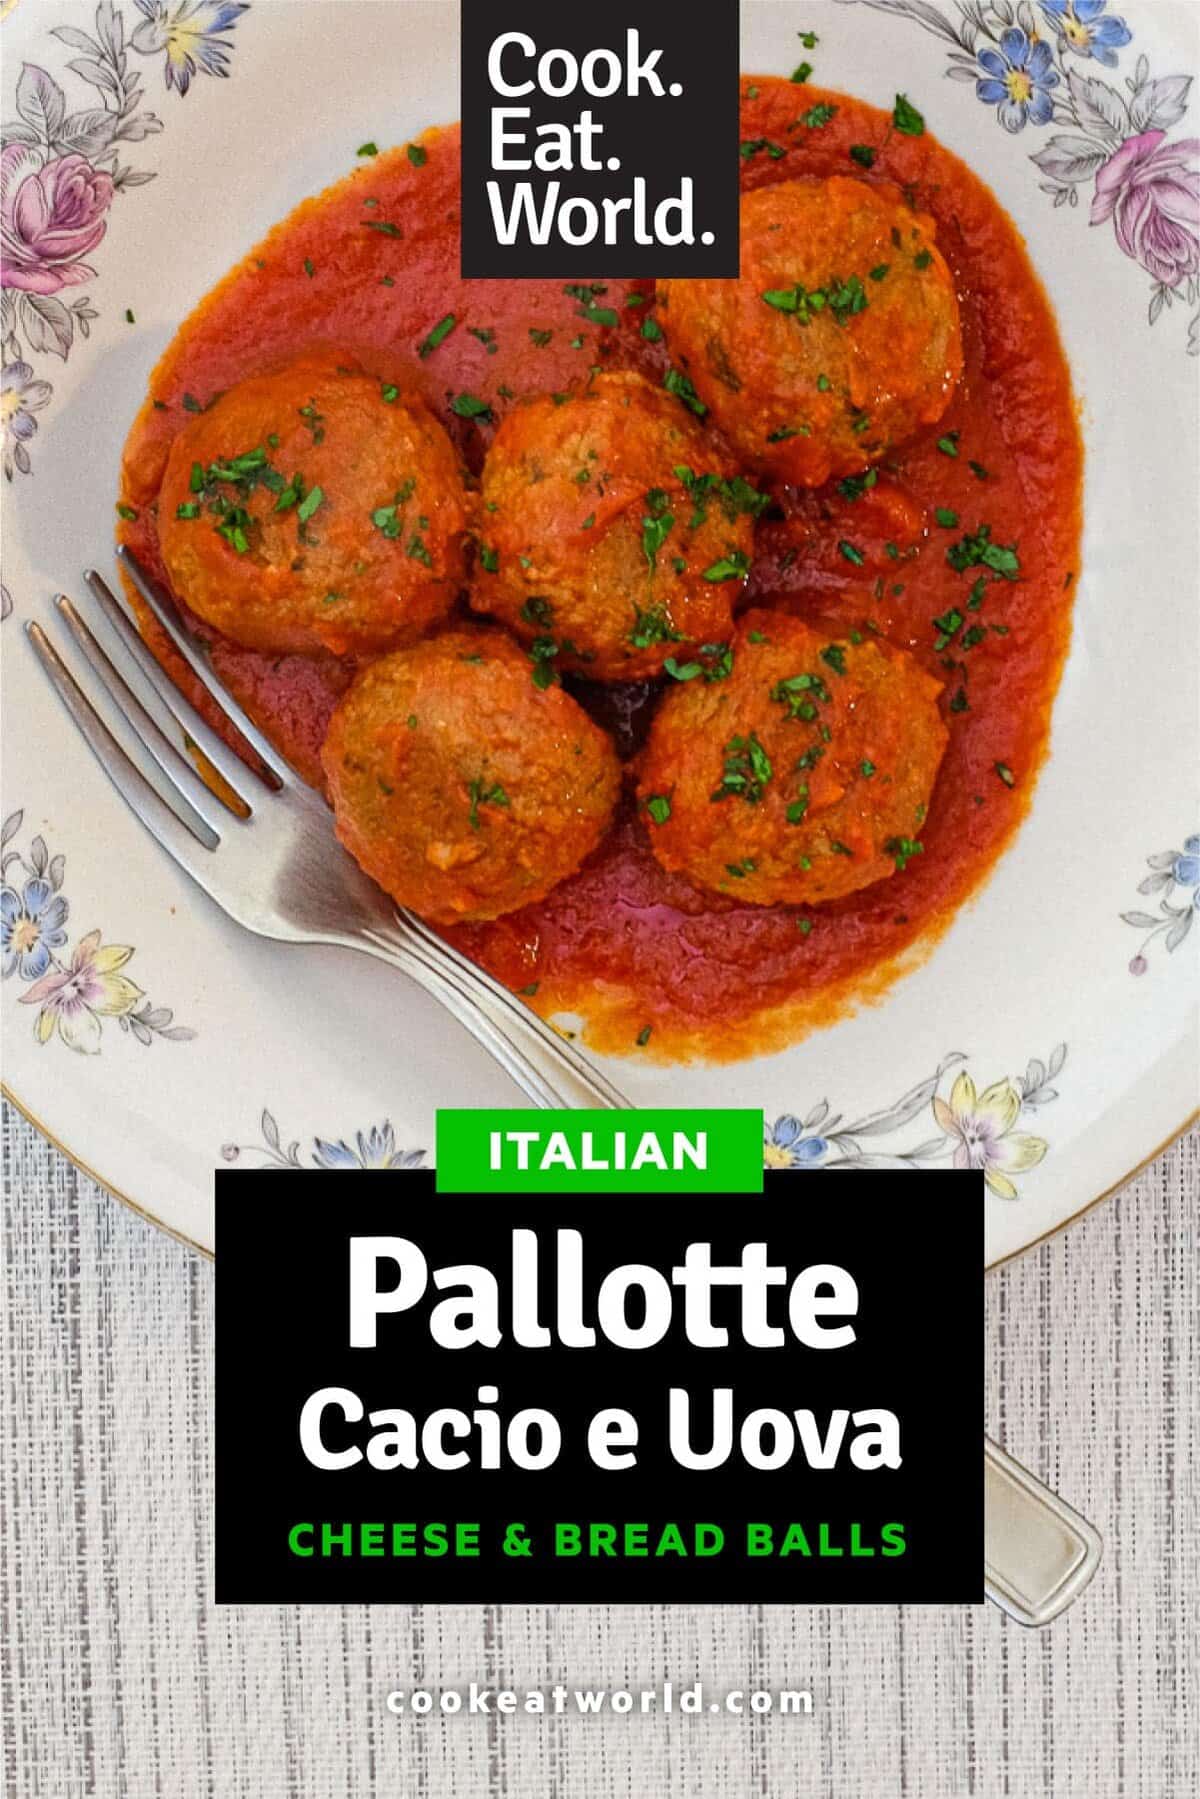 A plate of Pallotte - Cacio e Uova (Bread & Cheese balls) in a tomato sauce, garnished with a little Parmigiano cheese.